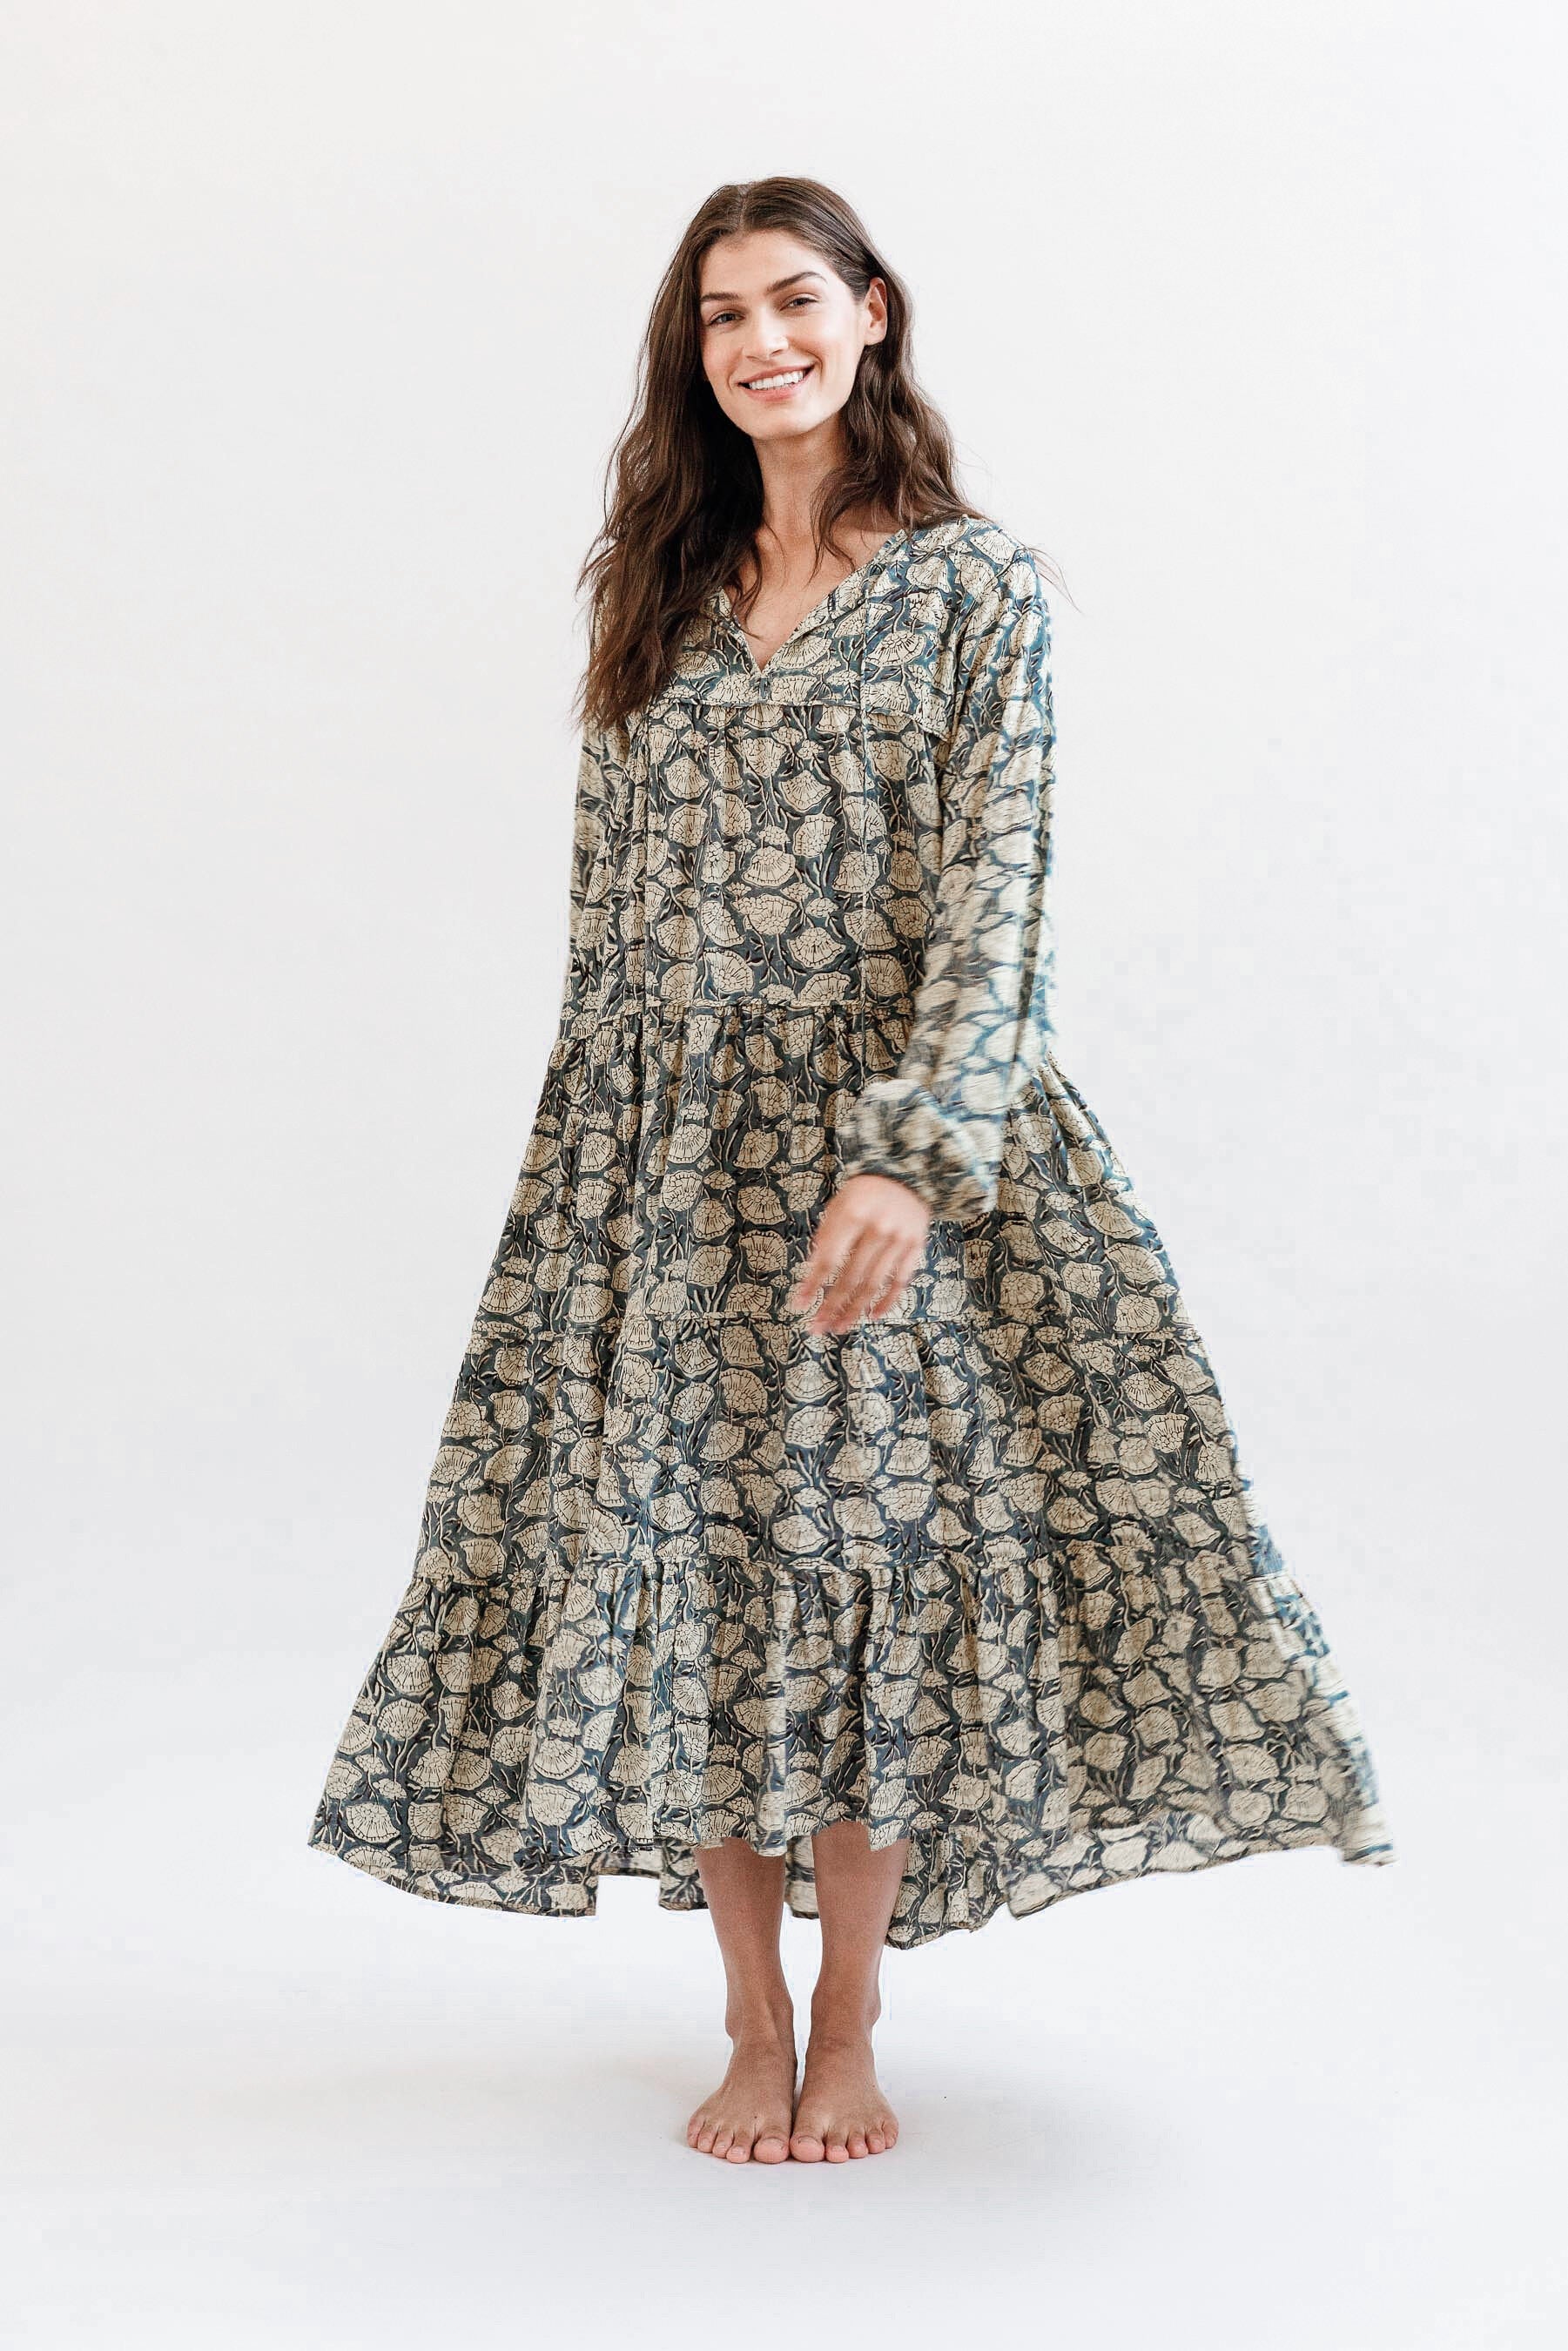 Maelu Designs Willow Dress